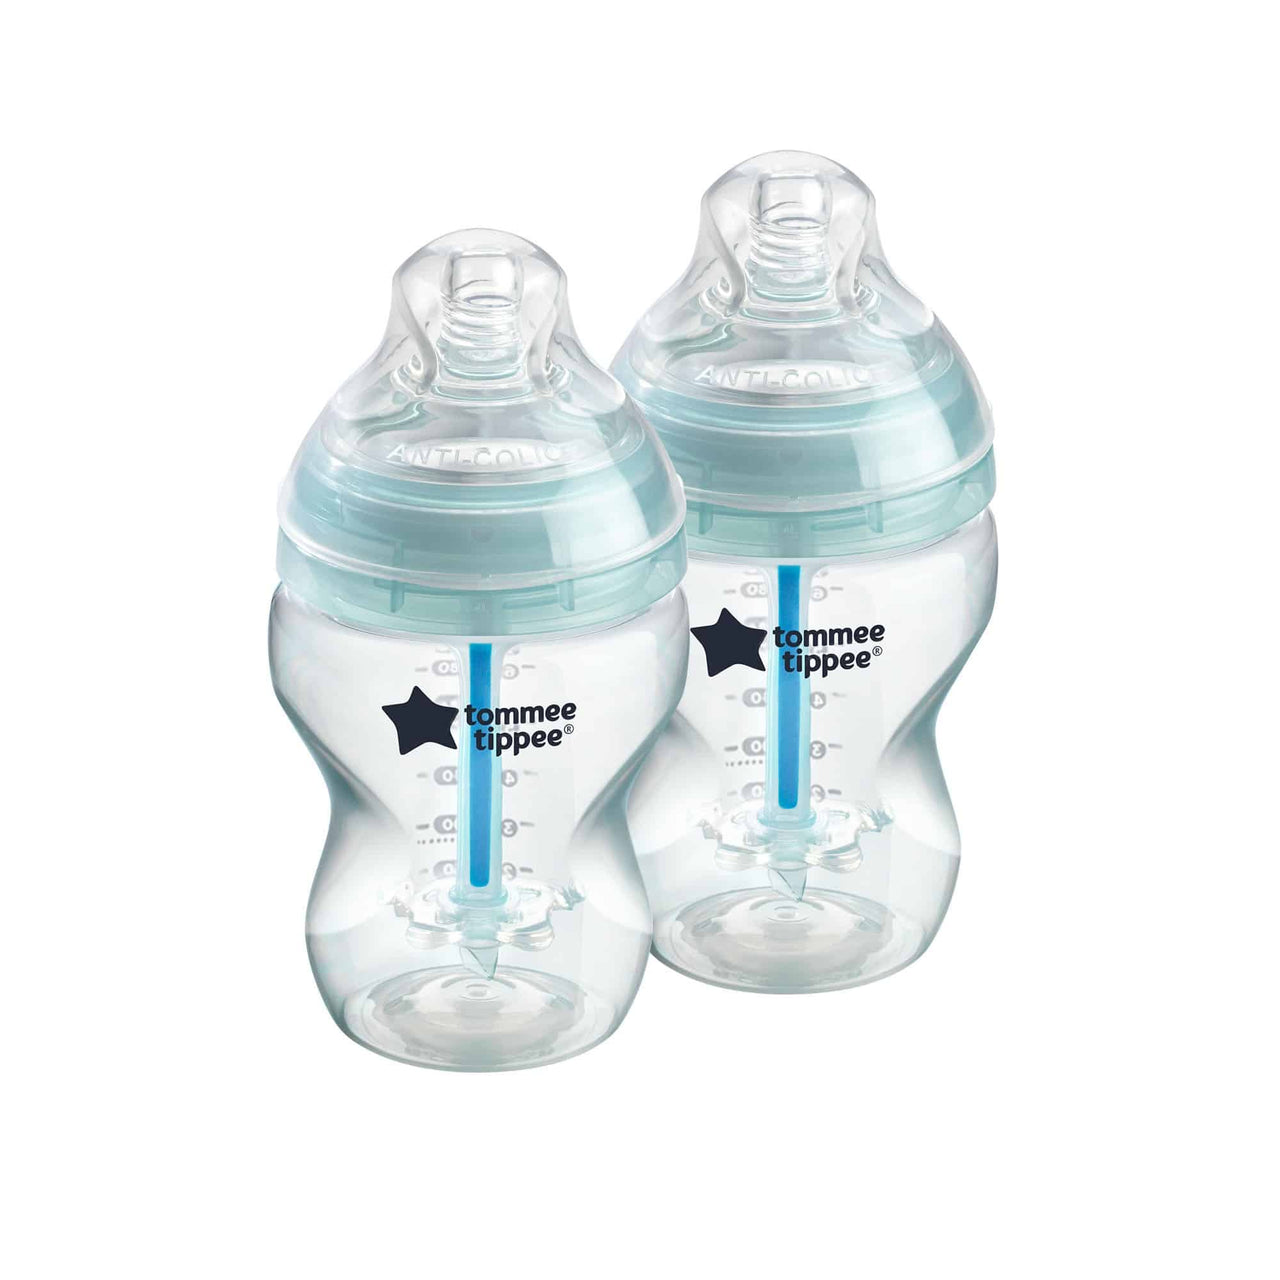 CTN Advanced Anti-colic Bottle 2 Pack